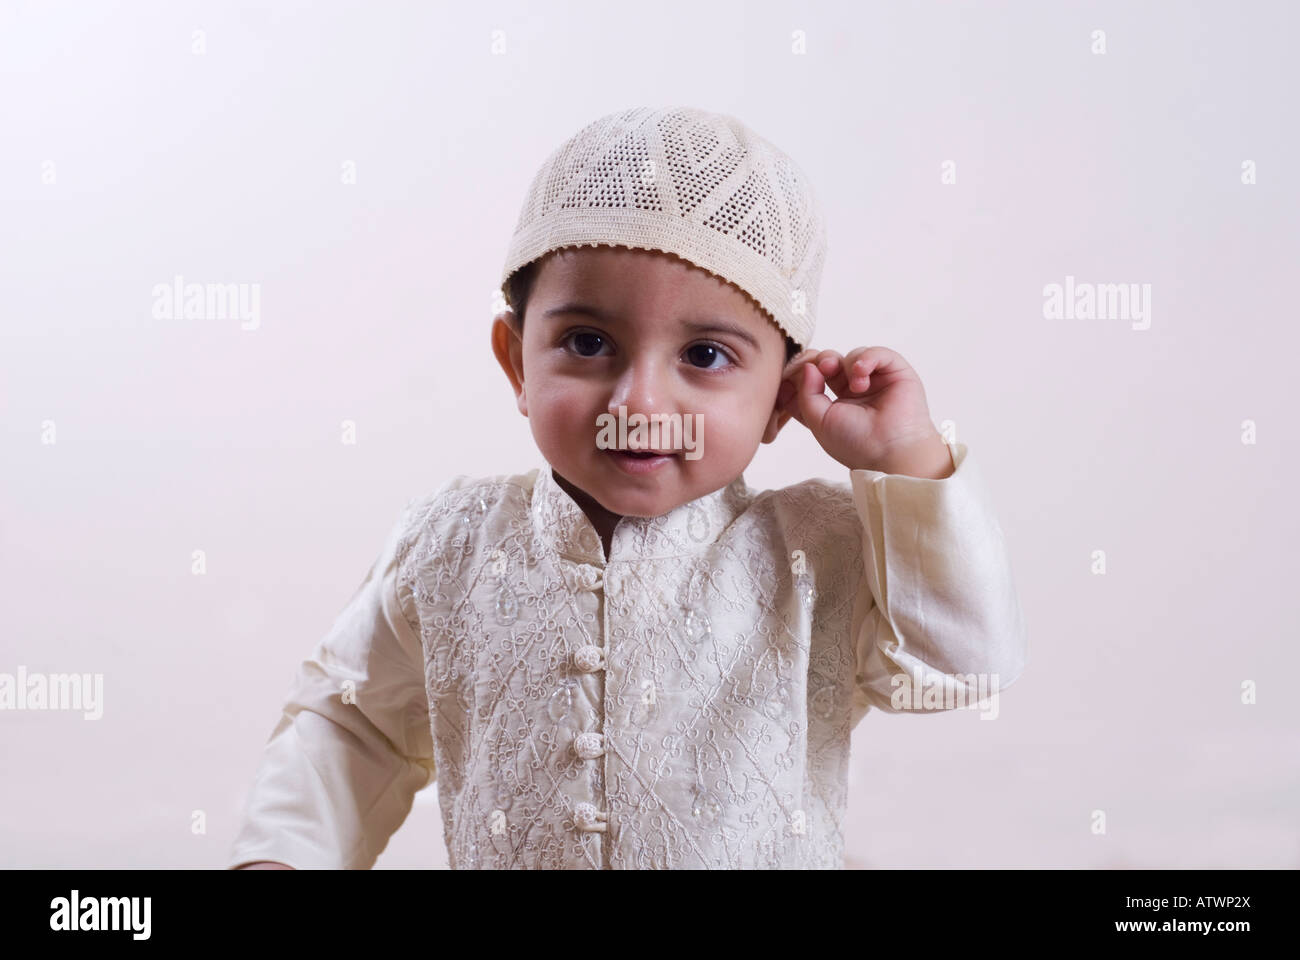 Muslim baby wearing traditional Islamic clothing smiling Stock ...